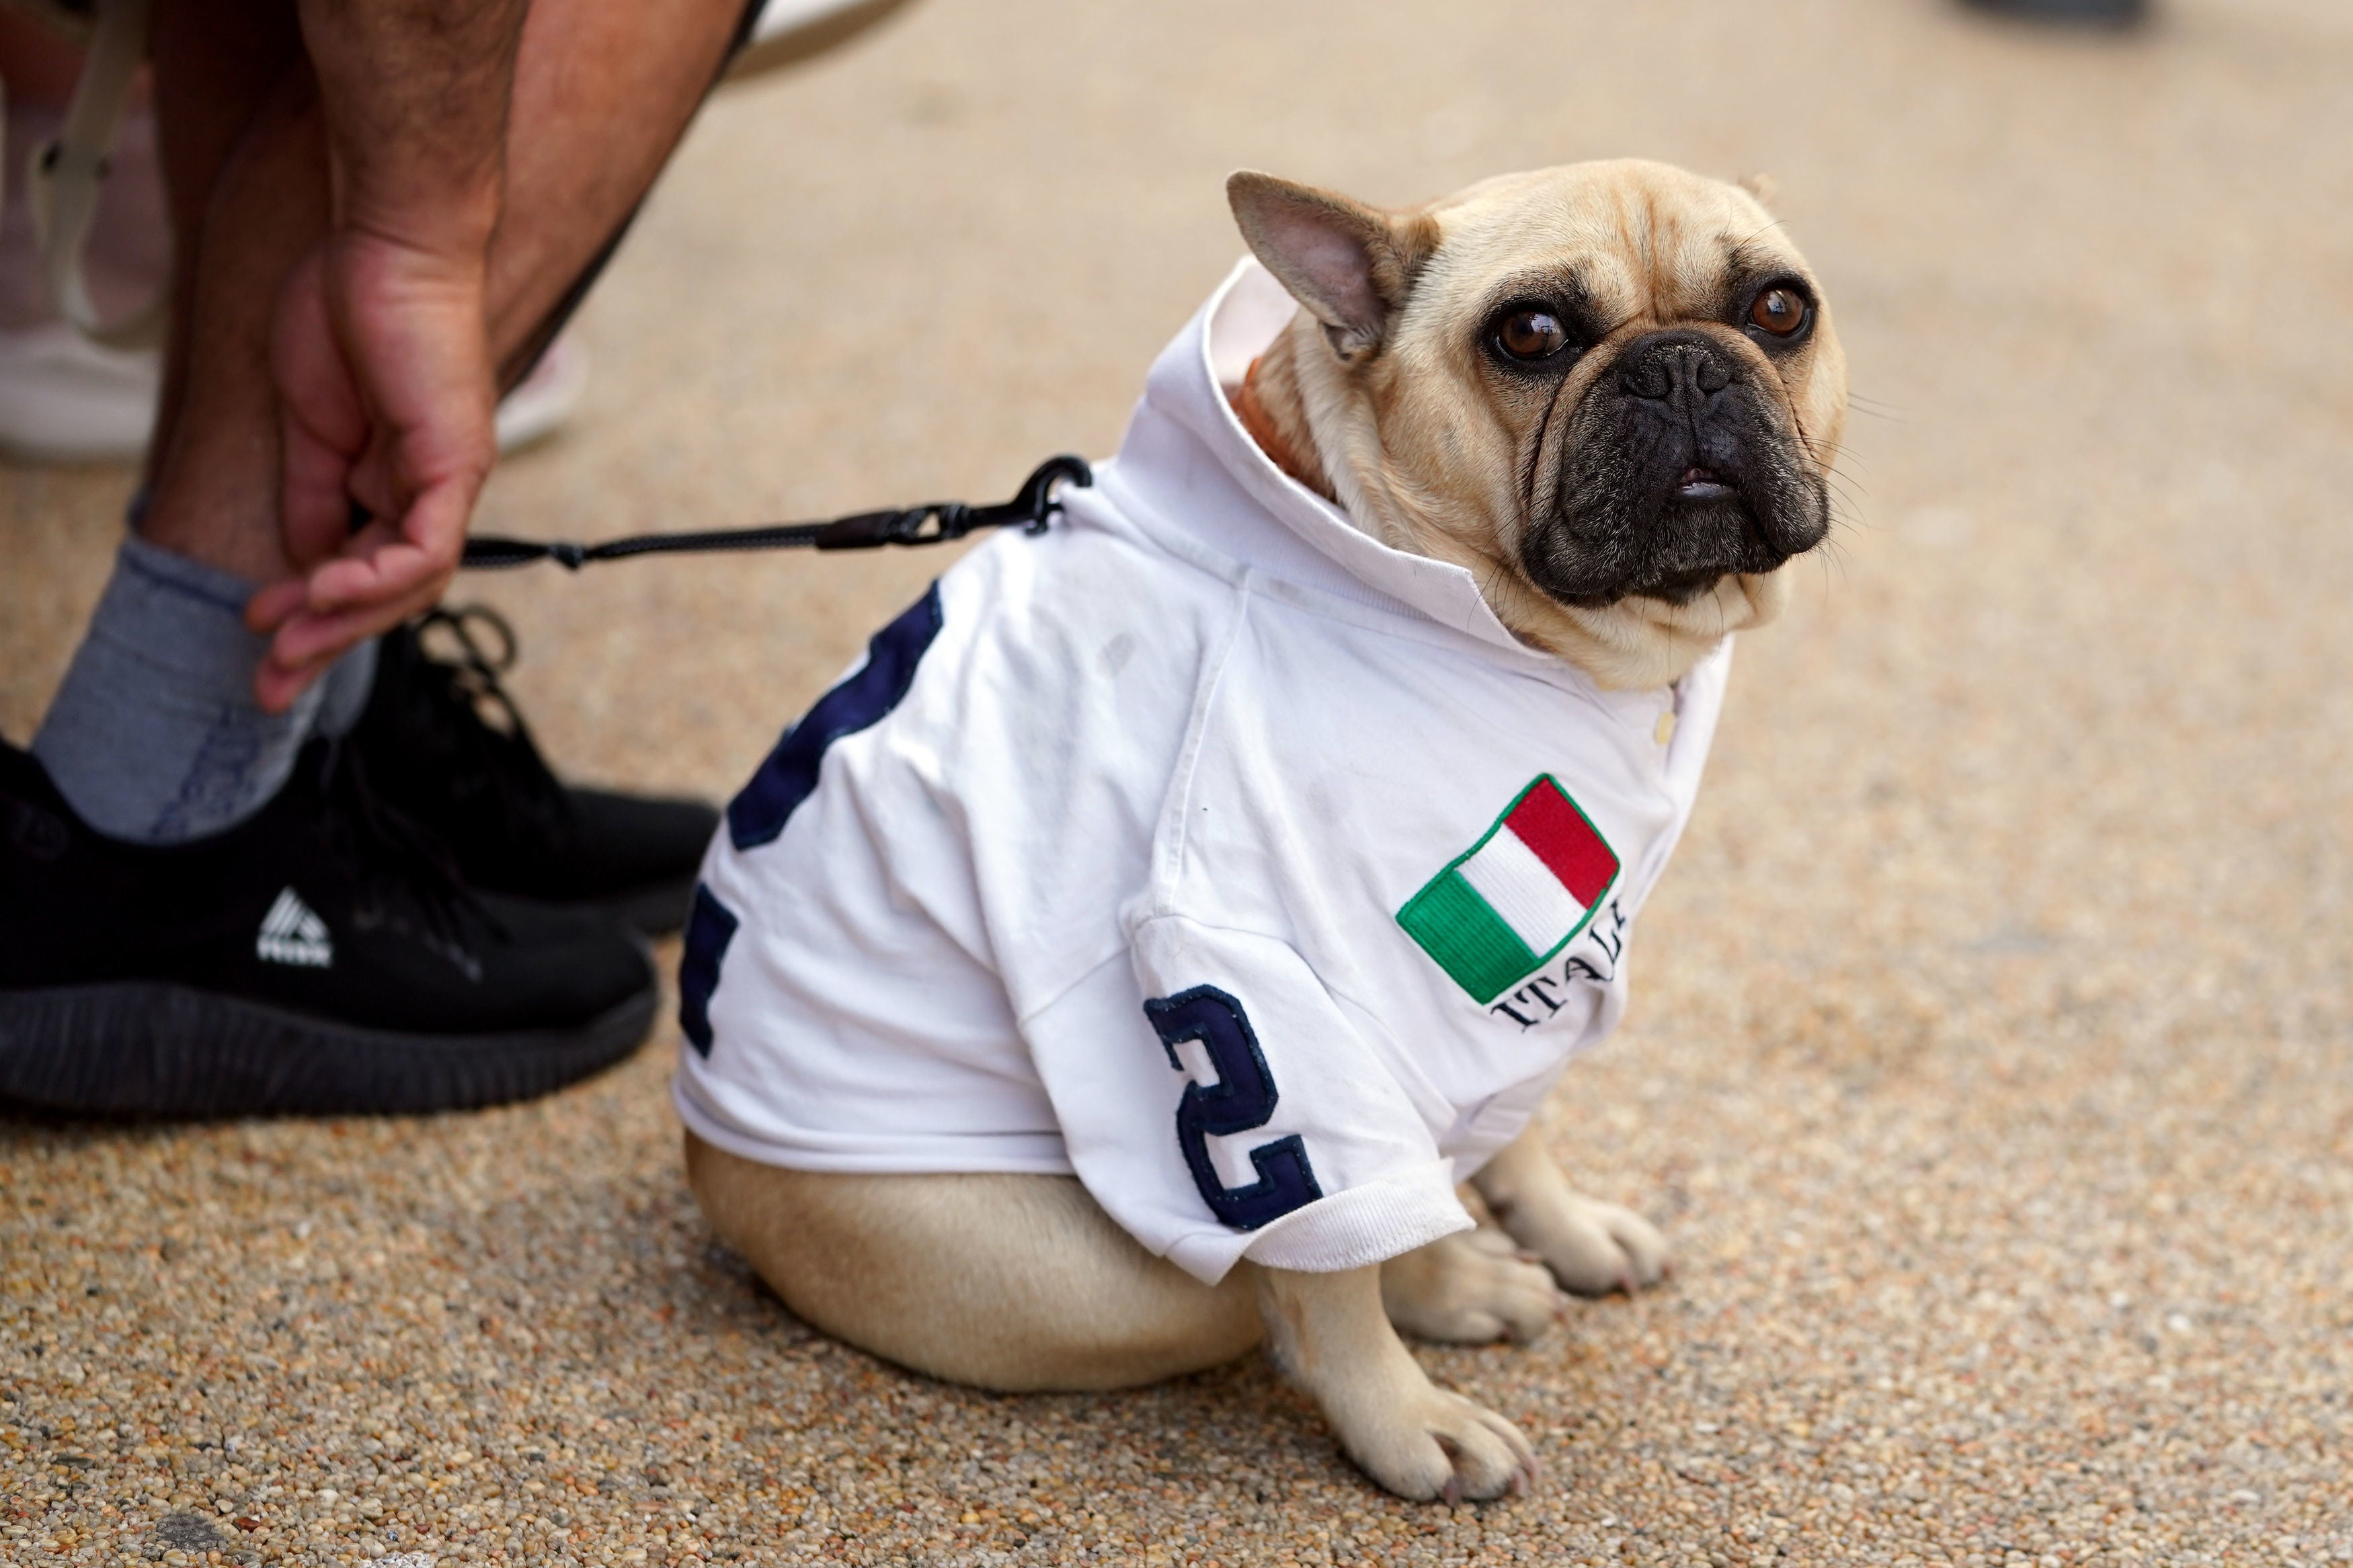 An Italy supporting dog at Wembley